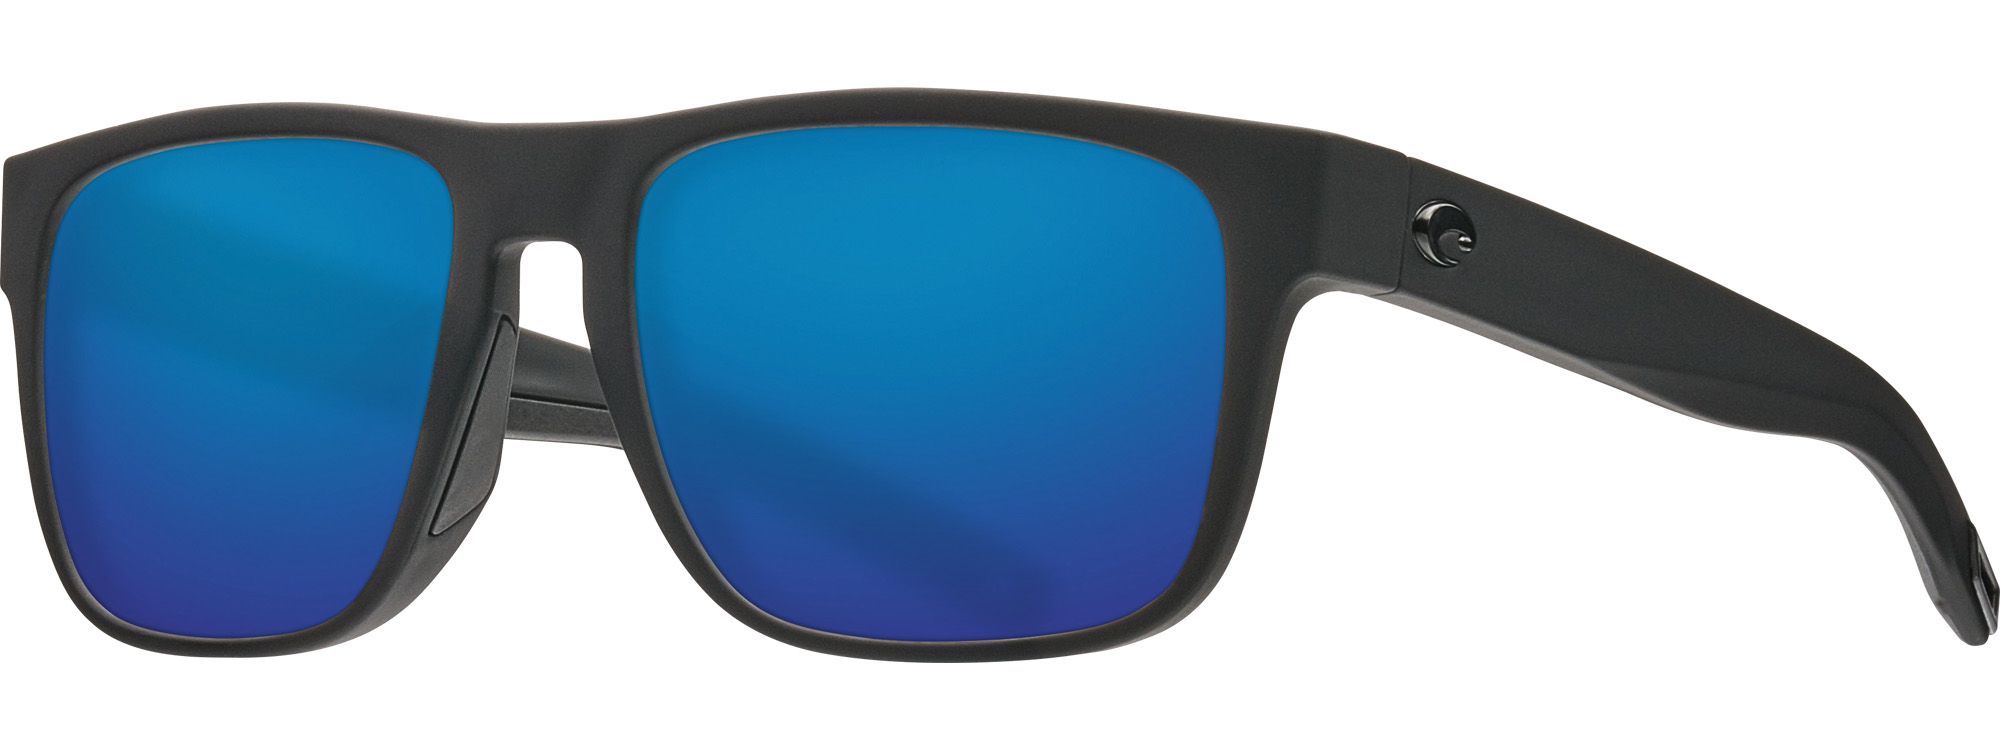 costa 580g sunglasses